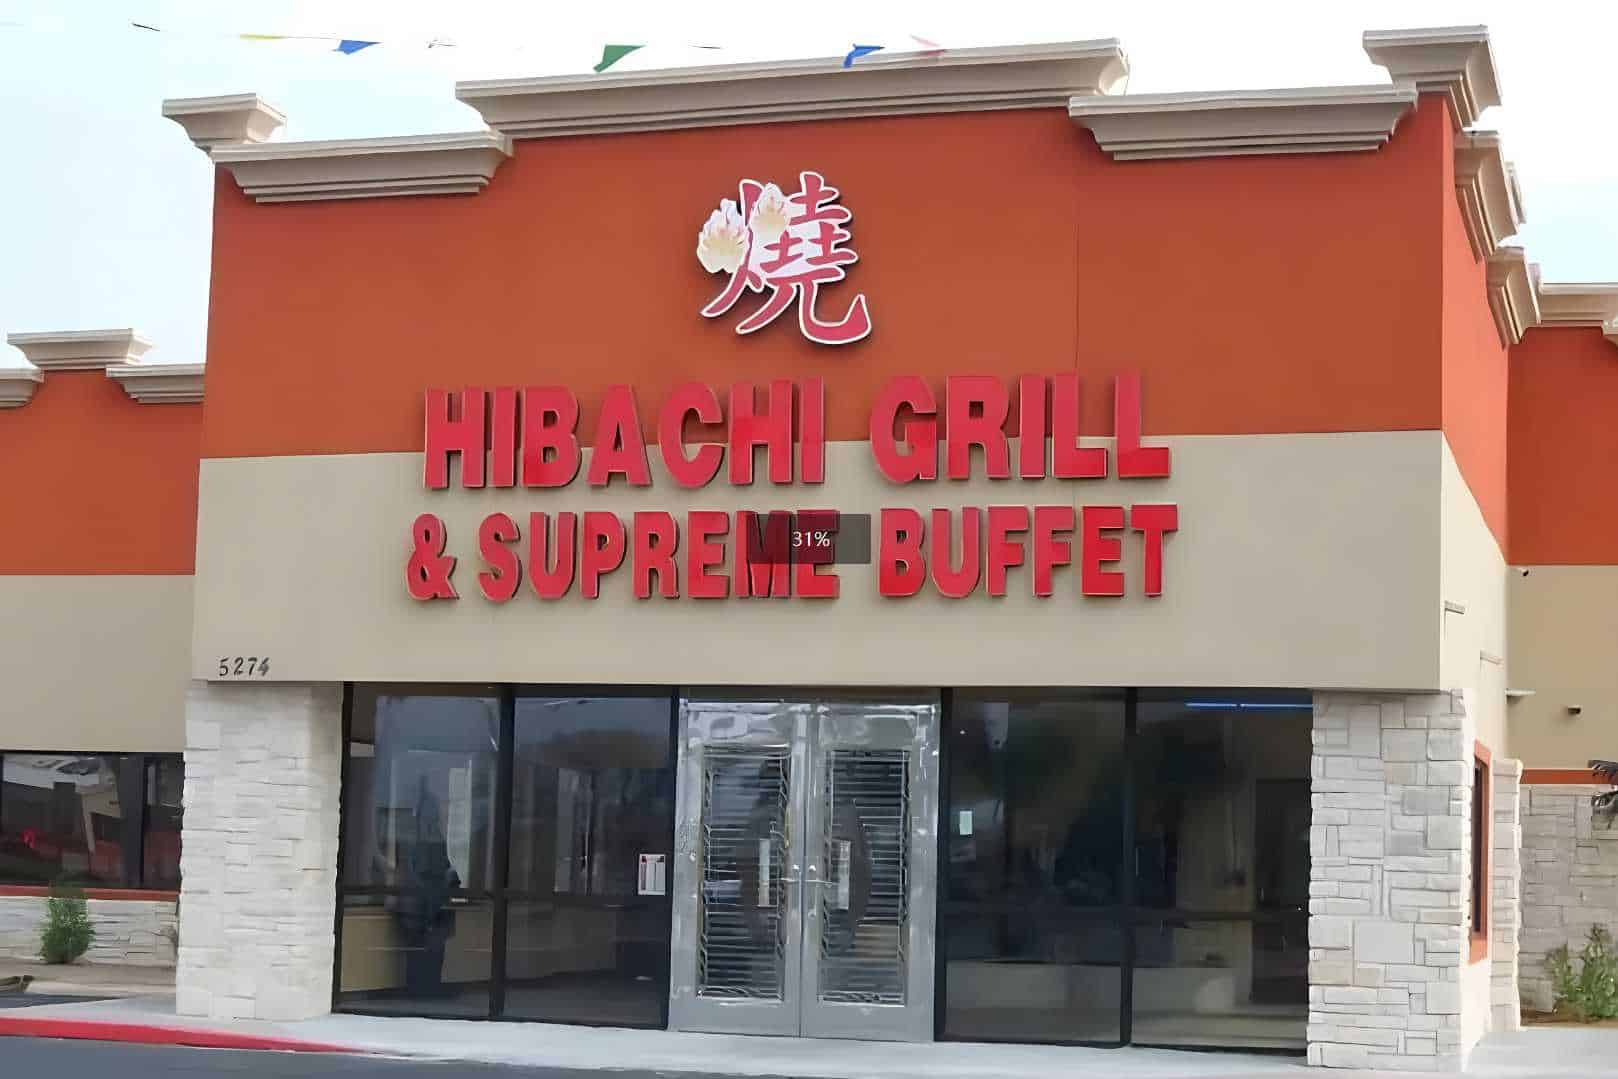 Hibachi Grill Supreme Buffet Best Chinese Restaurants in Corpus Christi, TX 